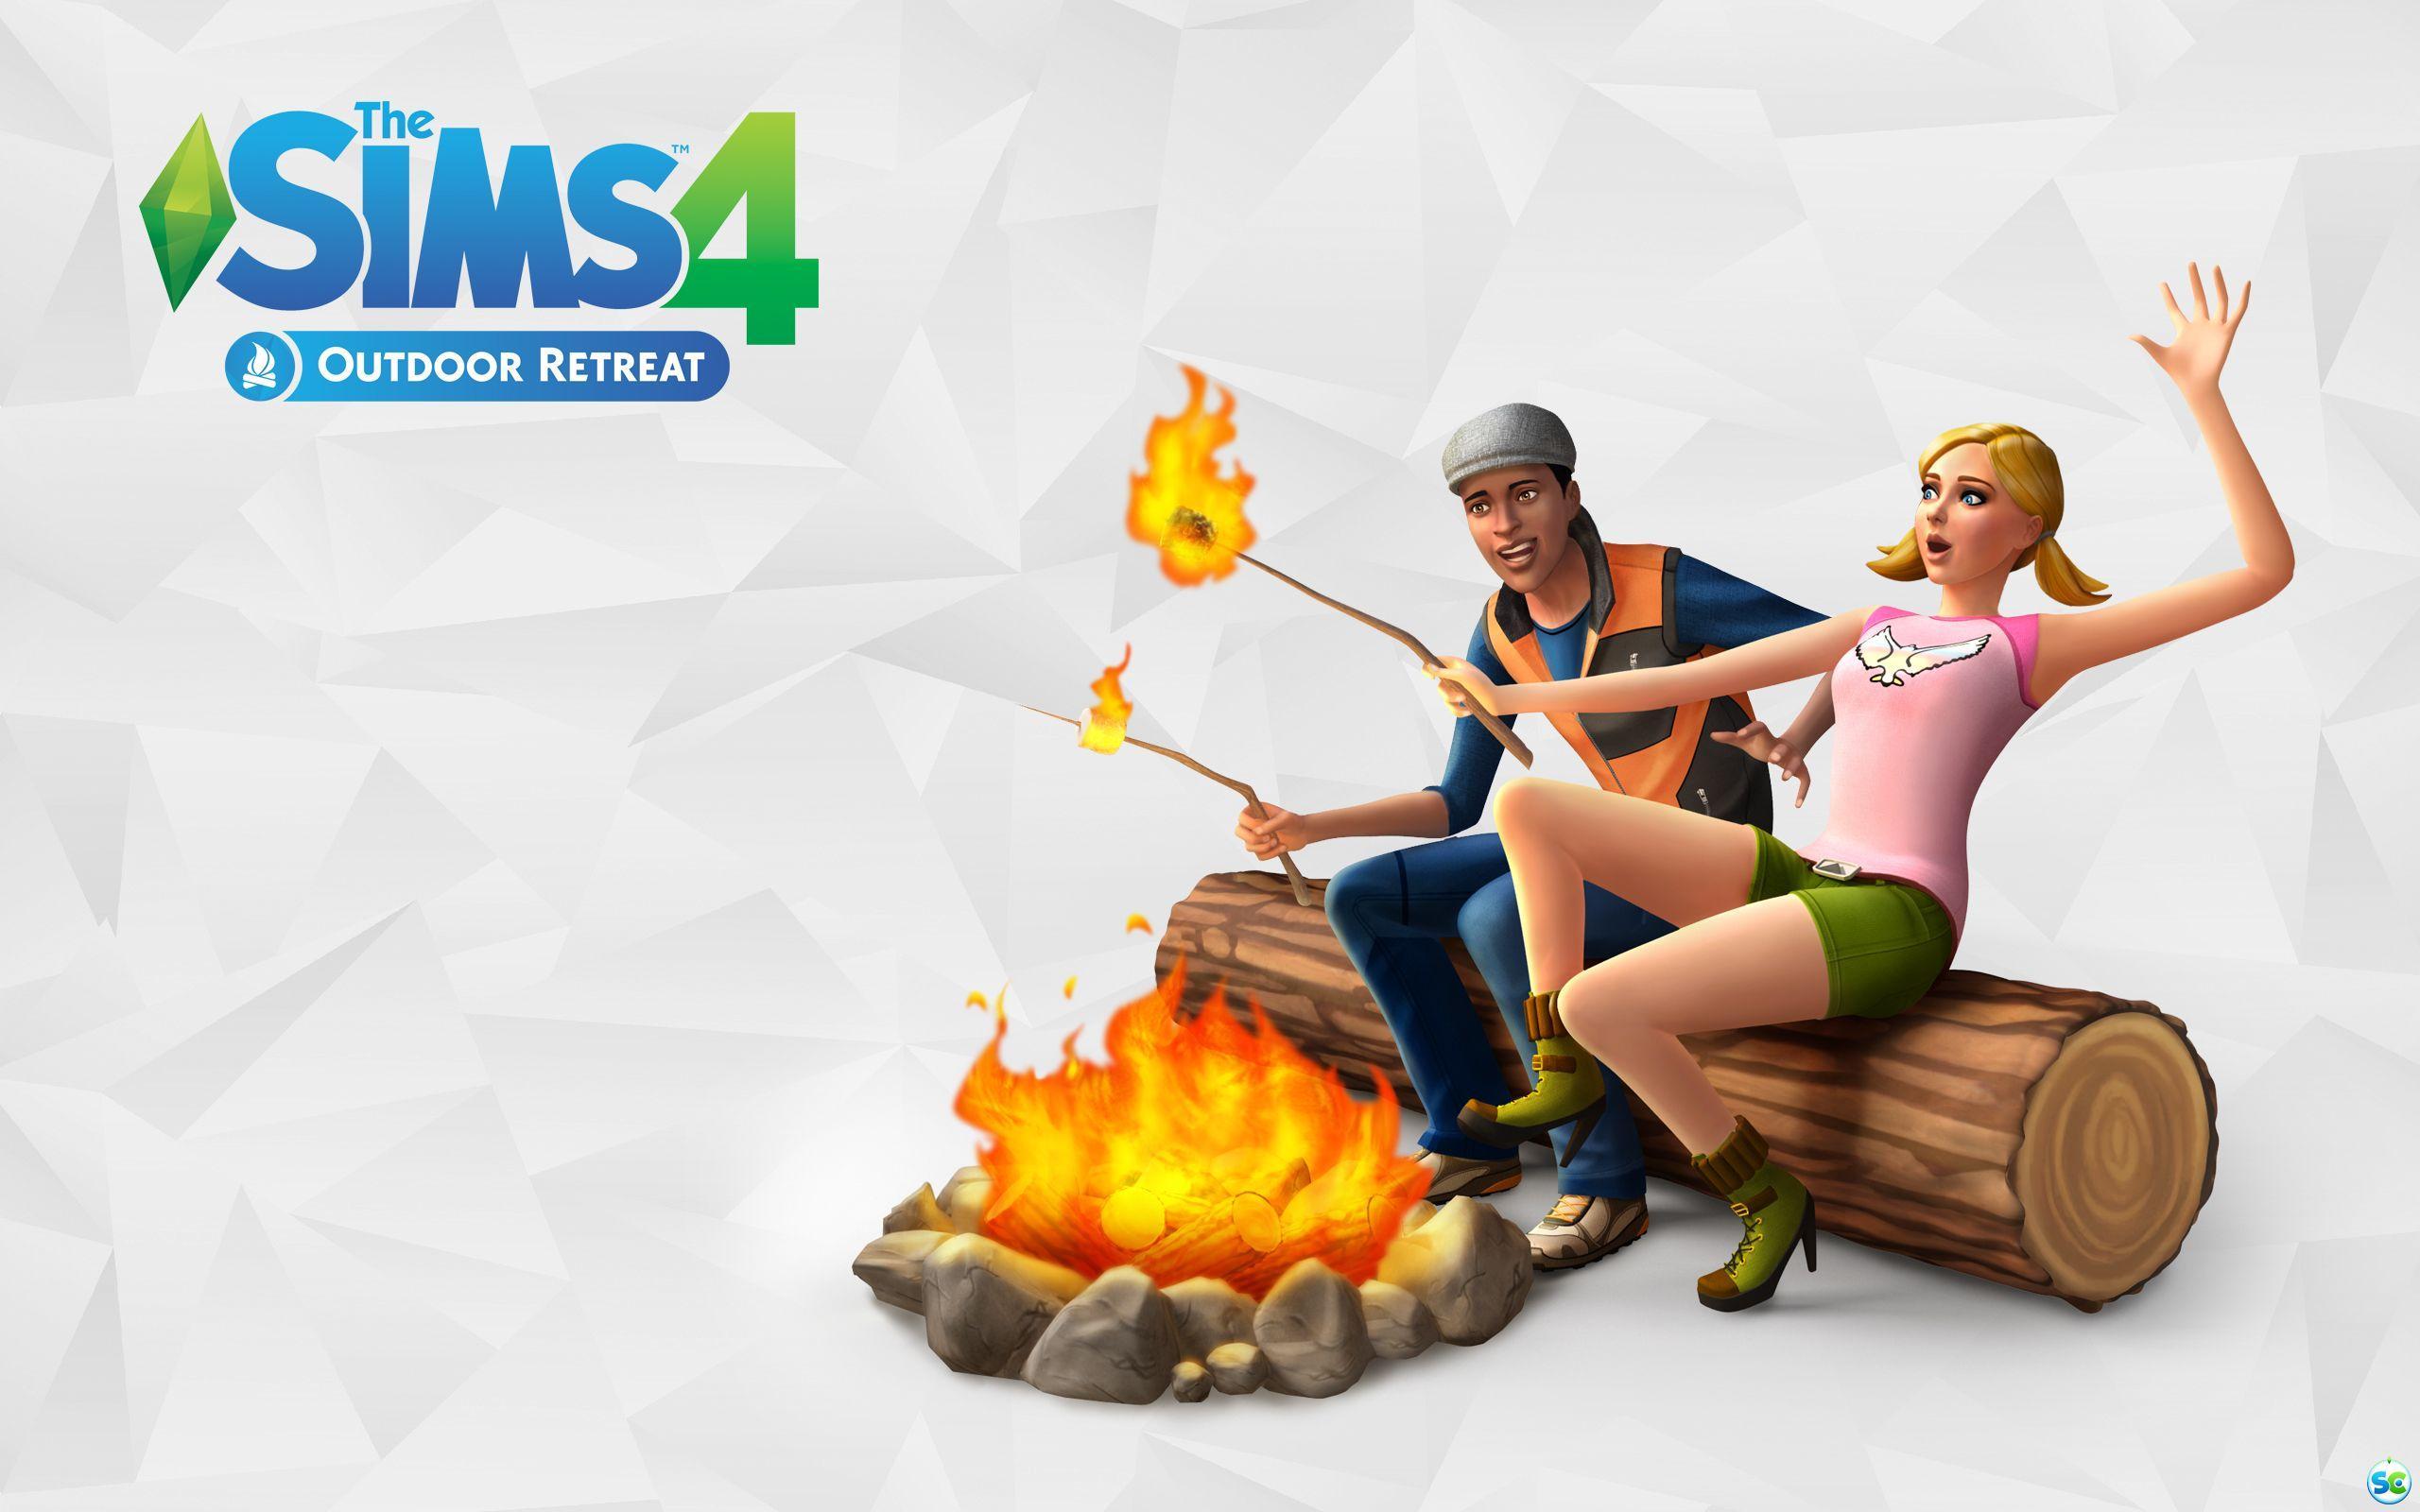 The Sims 4: New Wallpaper! (+ Windows 8 Themepack)